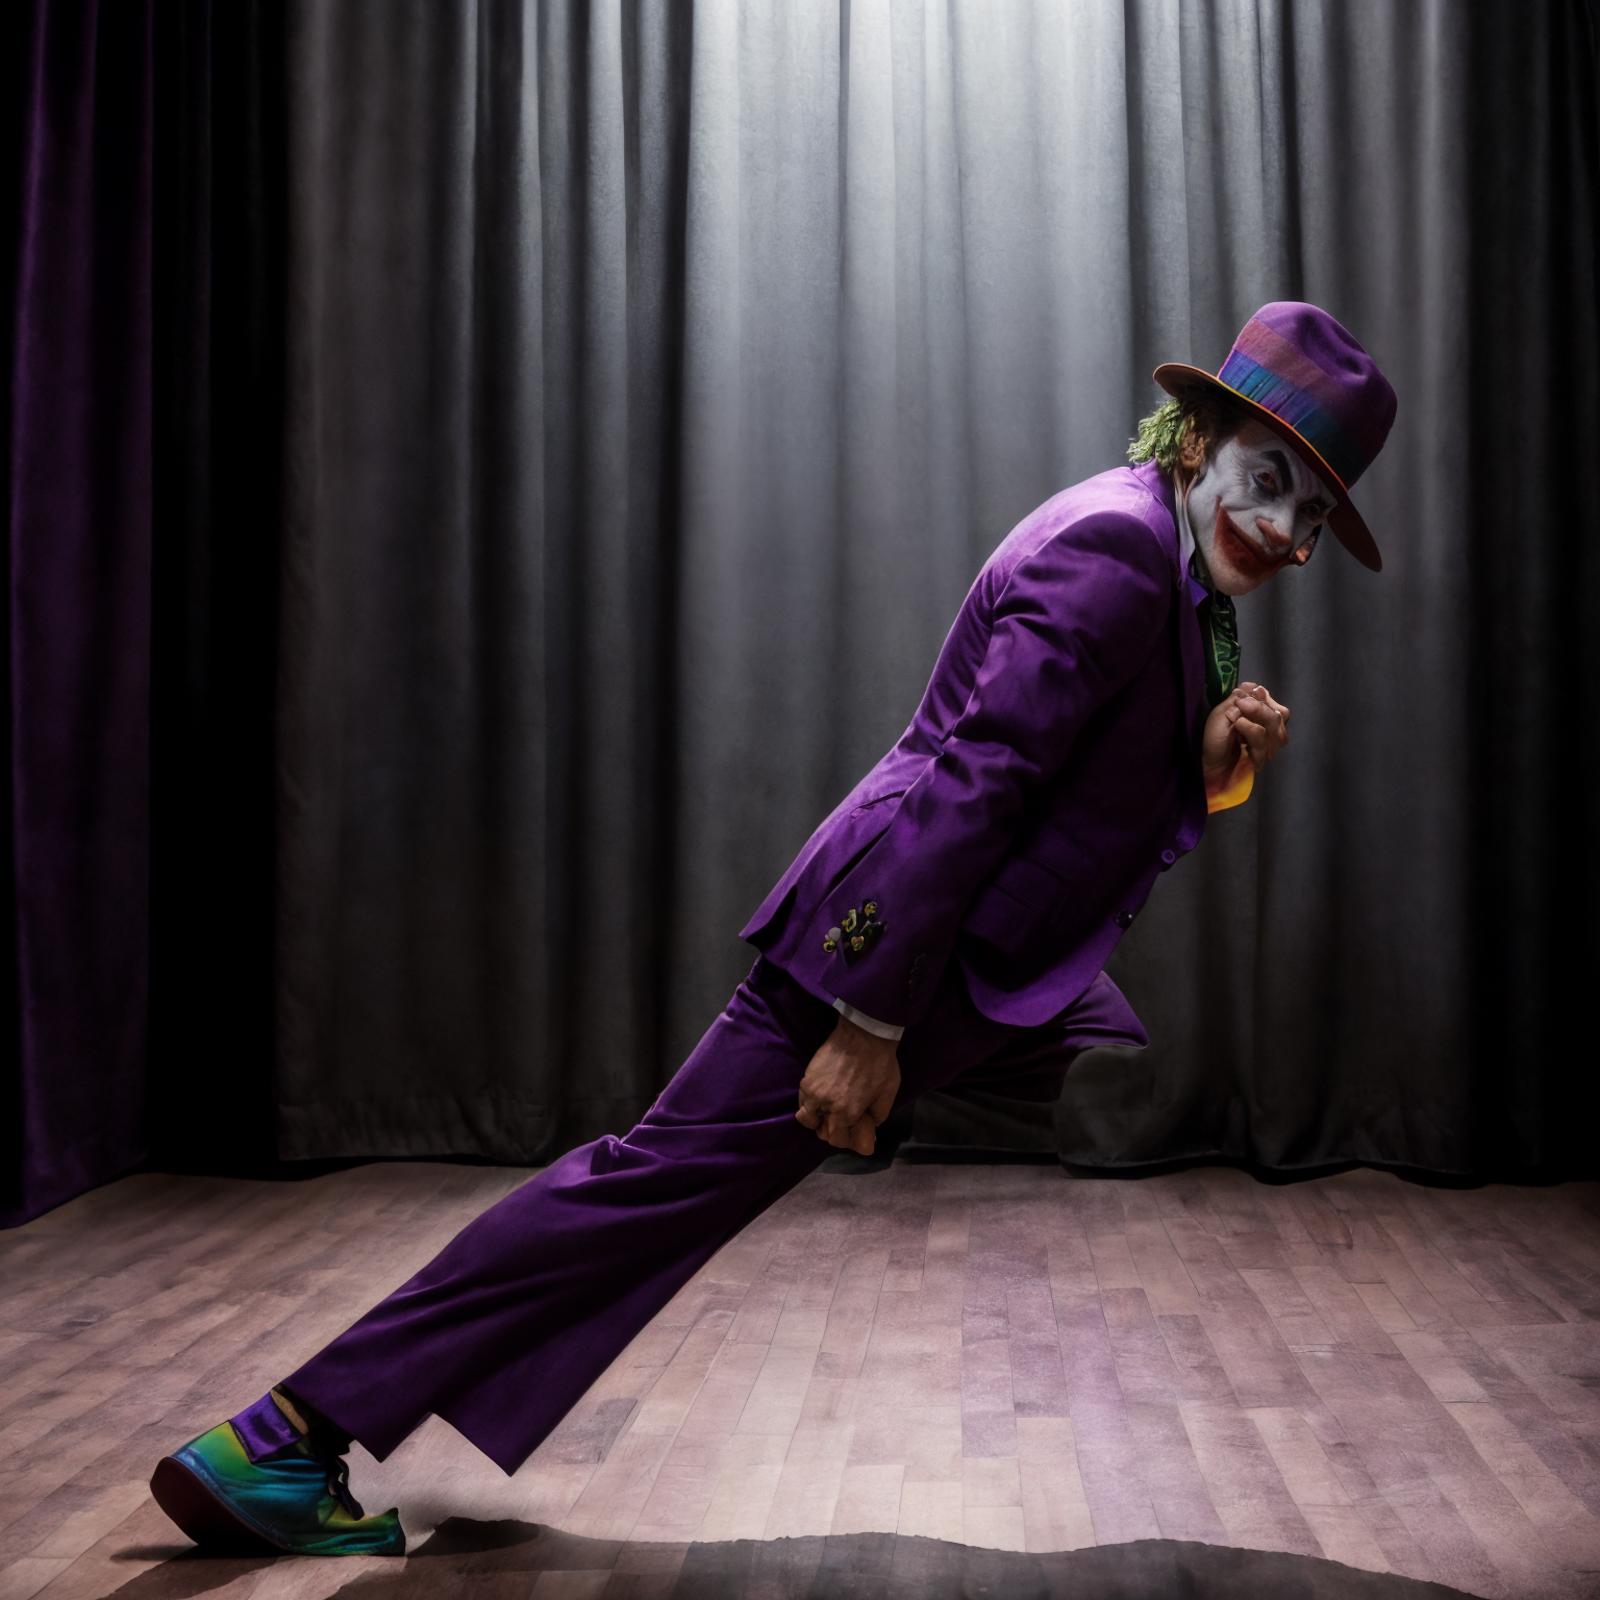 The Joker | Photorealistic Joker LoRa image by WilliamTRiker